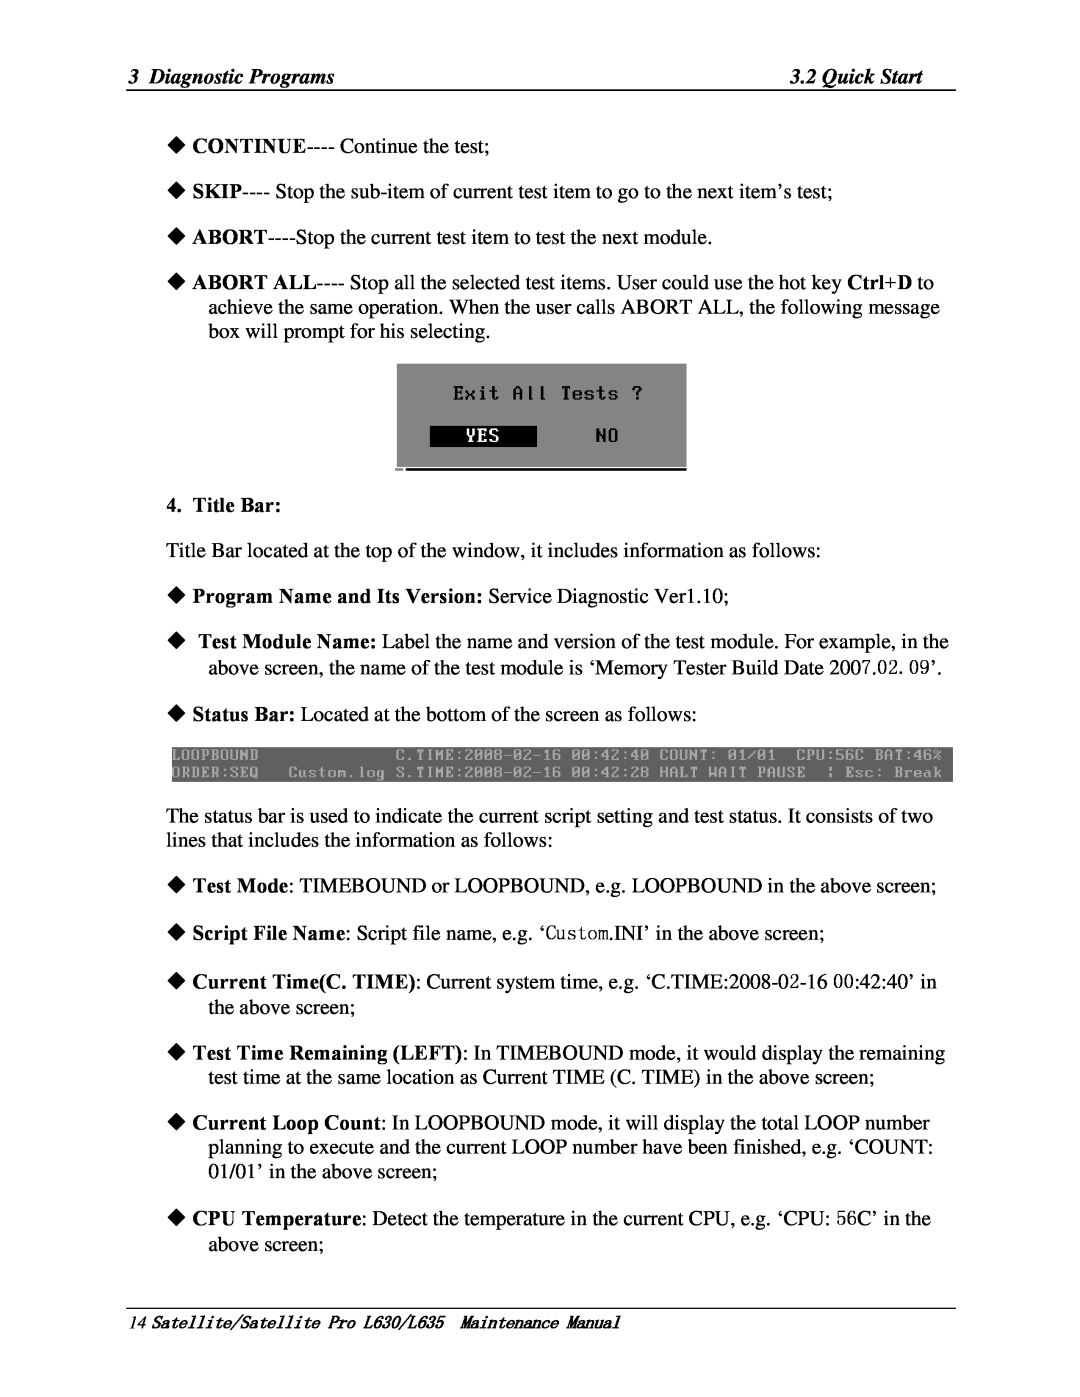 Toshiba L635, L630 manual Title Bar,  Program Name and Its Version Service Diagnostic Ver1.10 